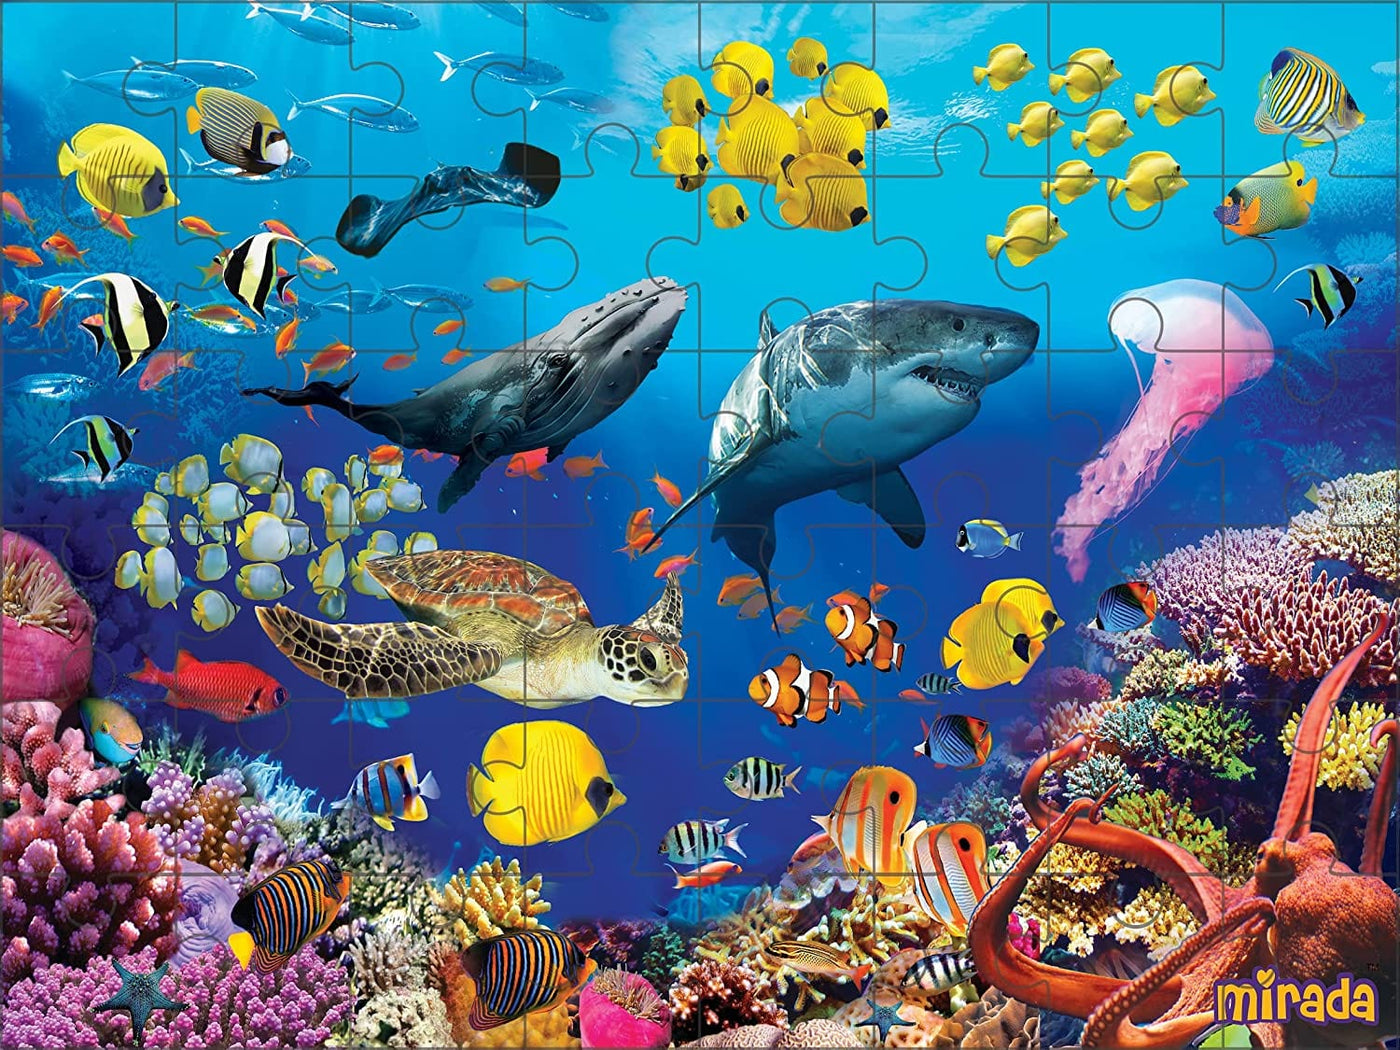 Under The Ocean: Giant Floor Puzzle - Glow In The Dark | Mirada by Mirada, India Toys